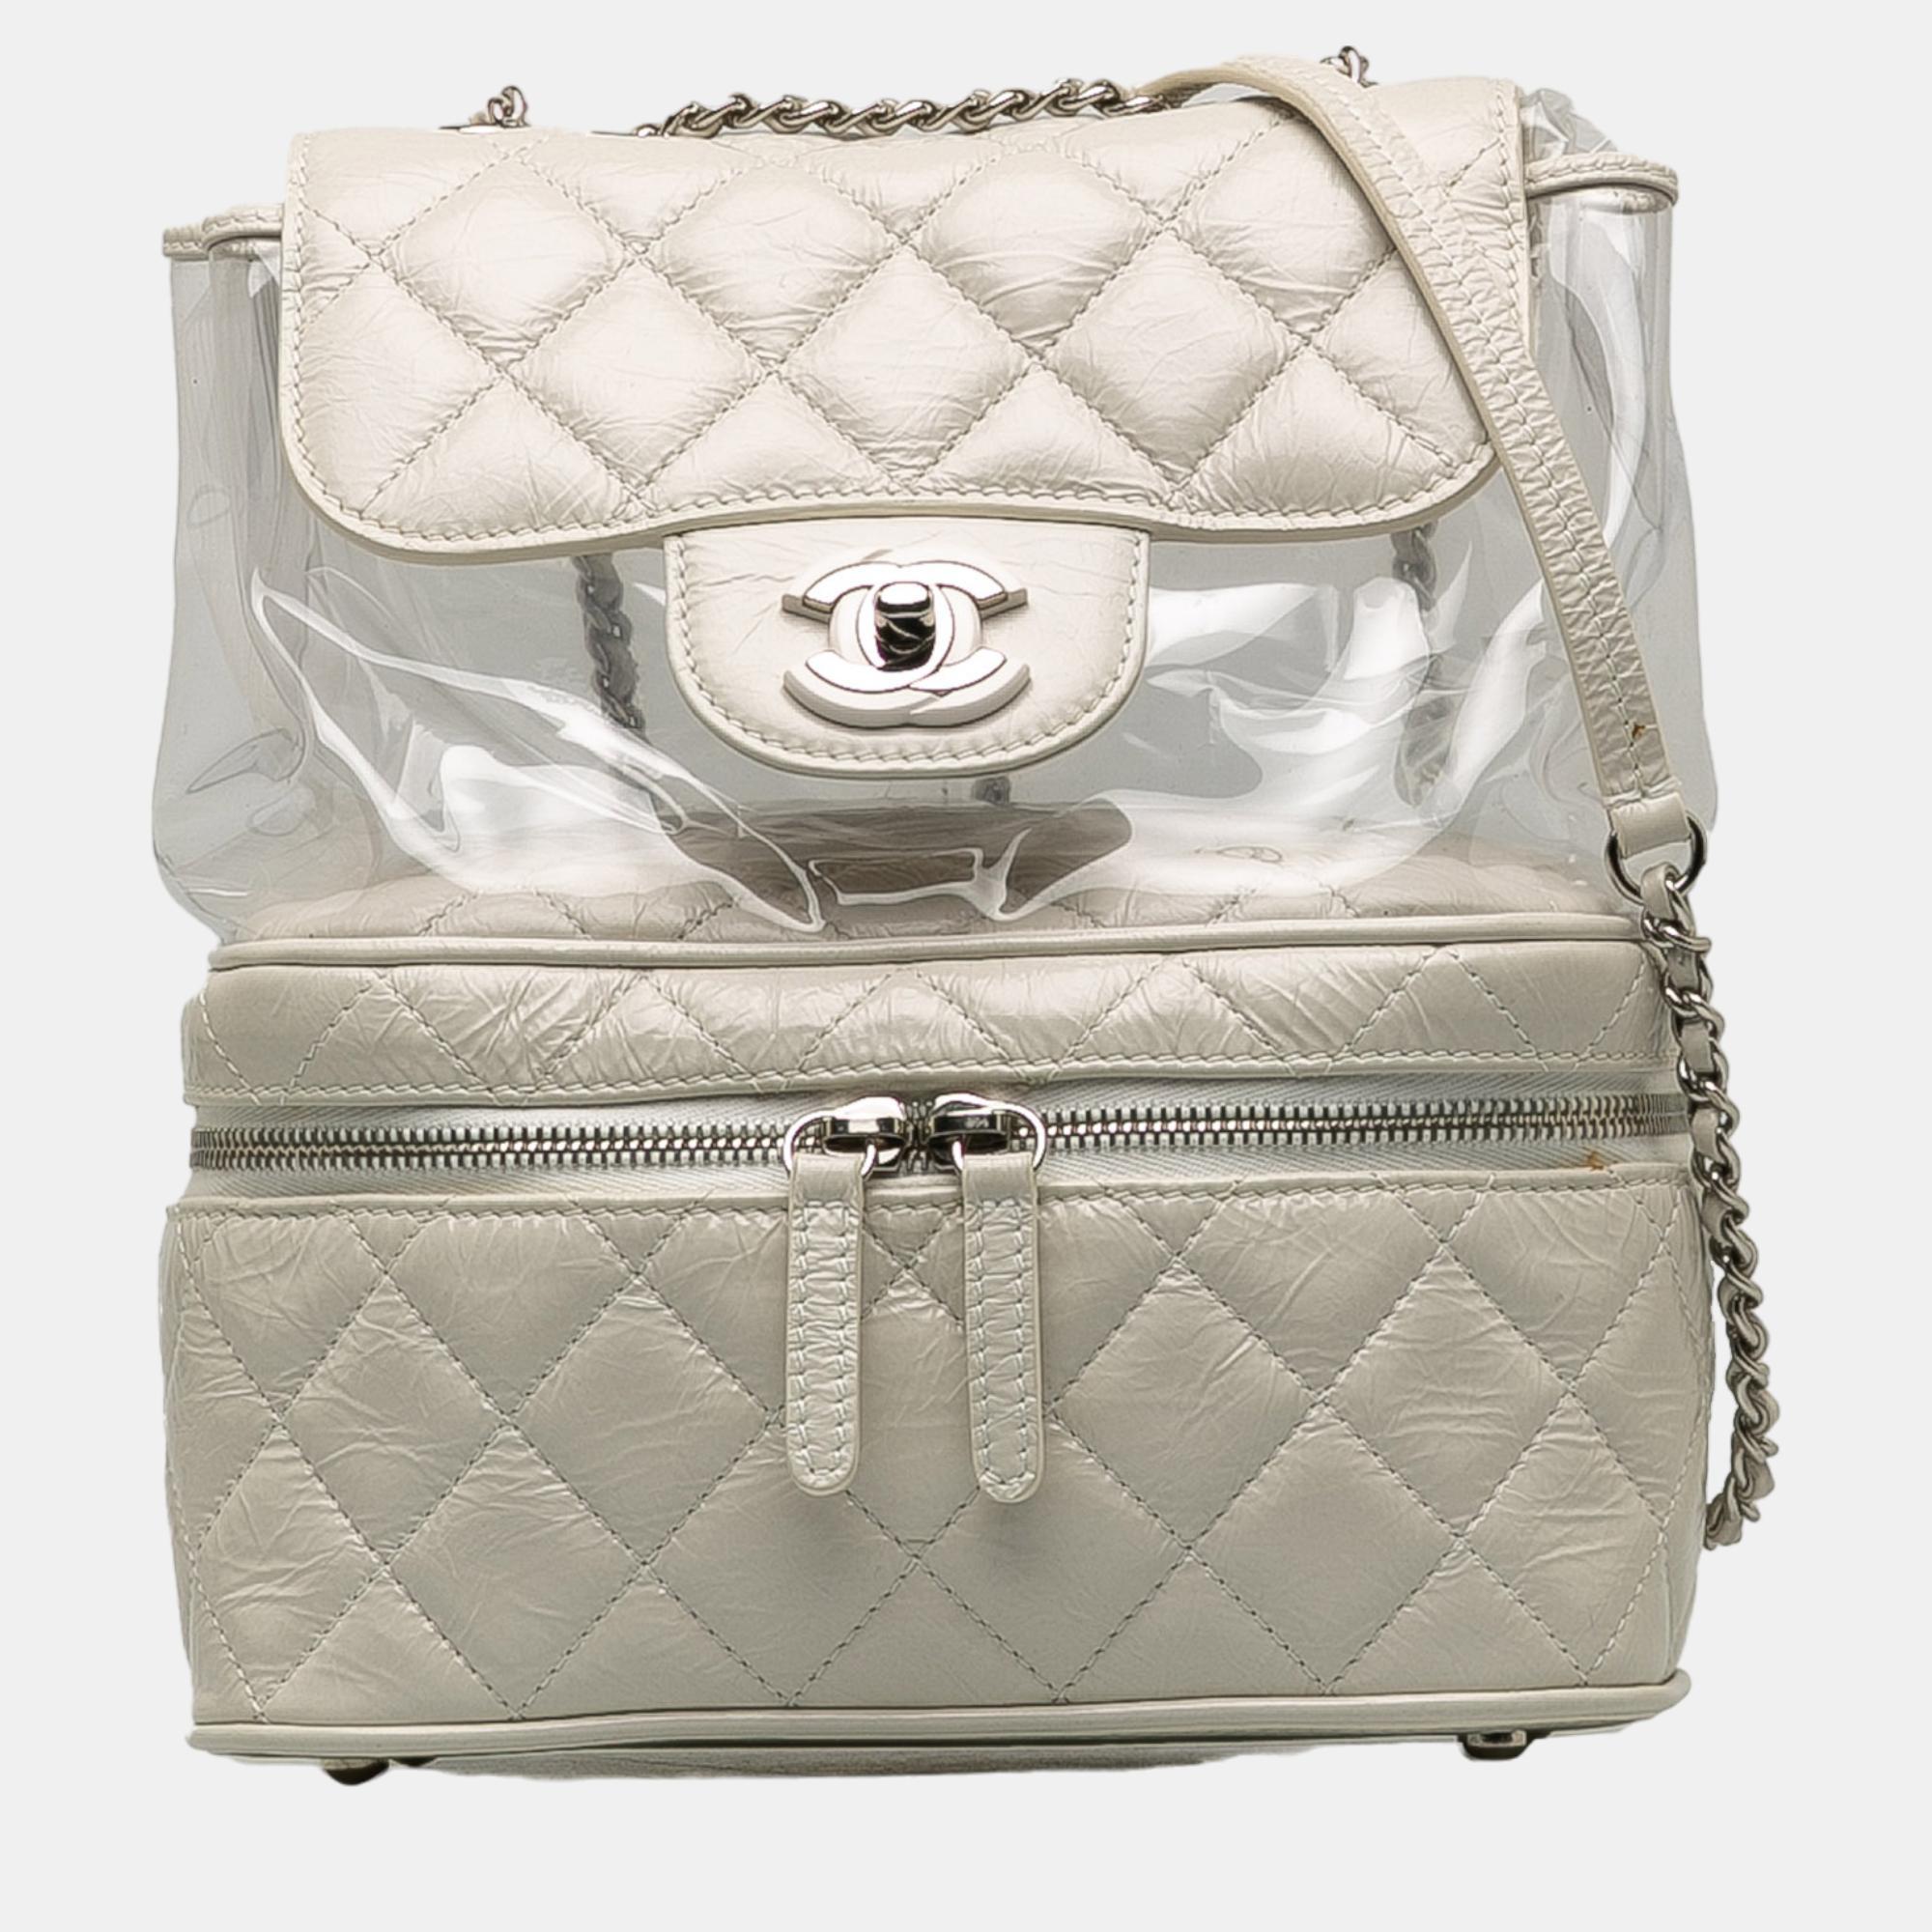 Chanel white aquarium backpack